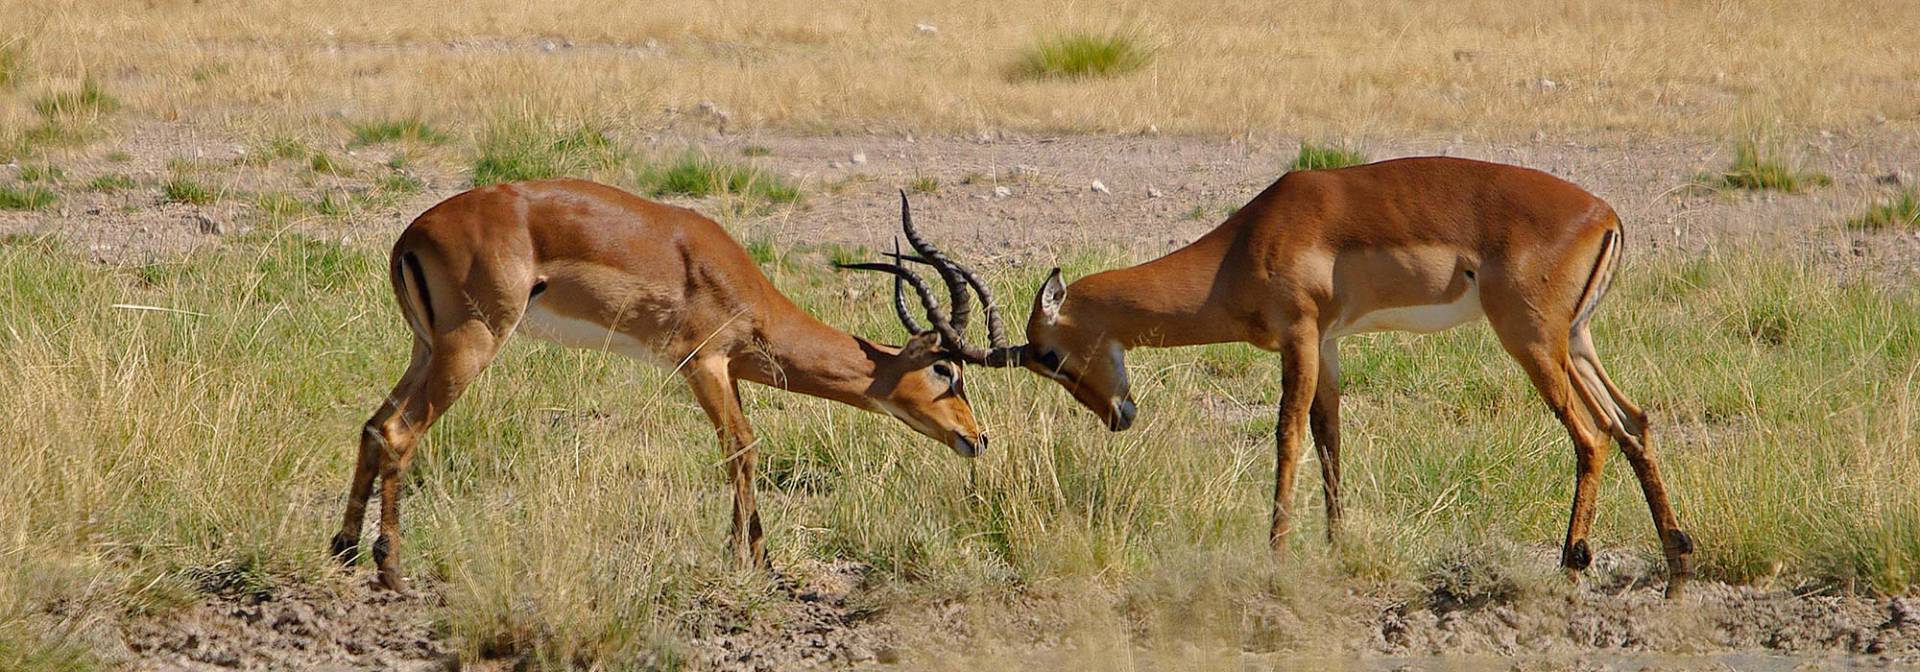 Kämpfende Impala im Nordosten Namibias